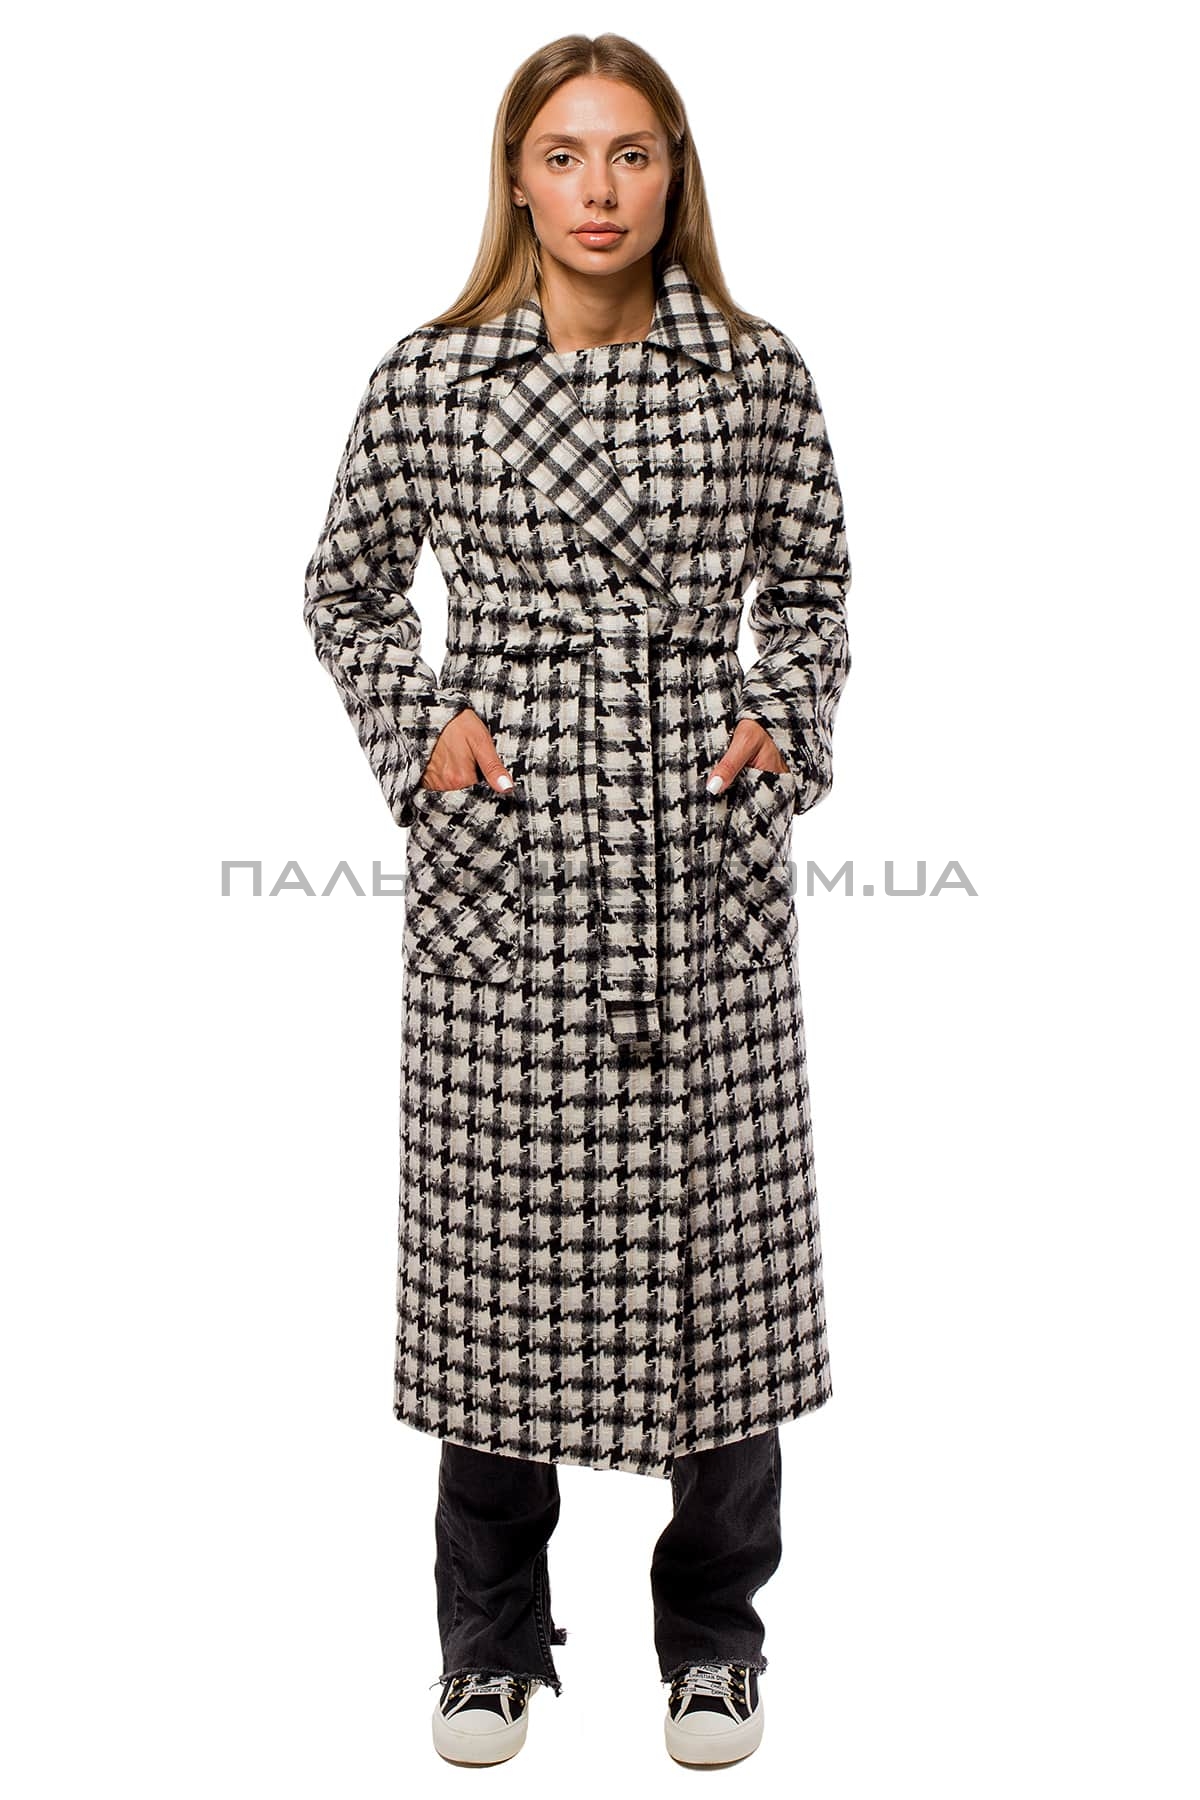  Стильне жіноче пальто гусяча лапка чорно-біле